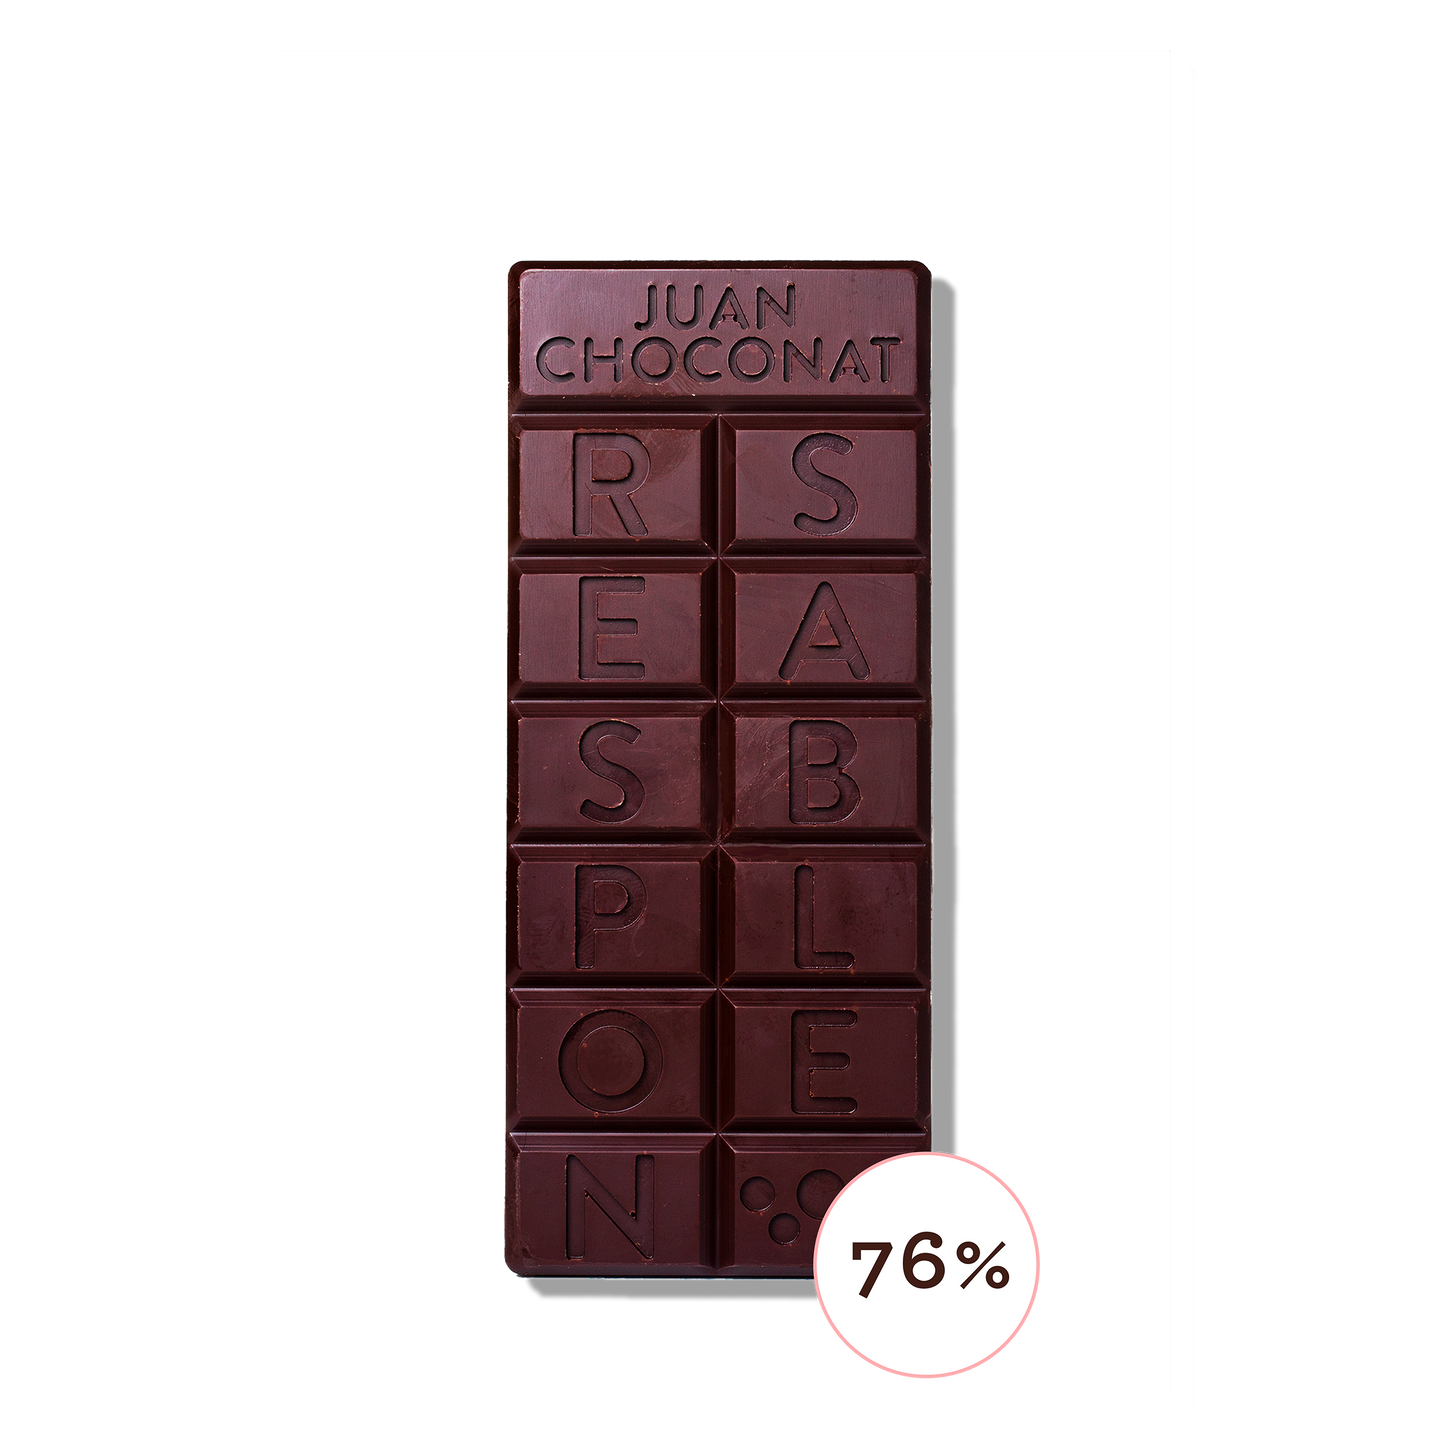 
                  
                    Dark Chocolate 76% Unroasted Cacao
                  
                